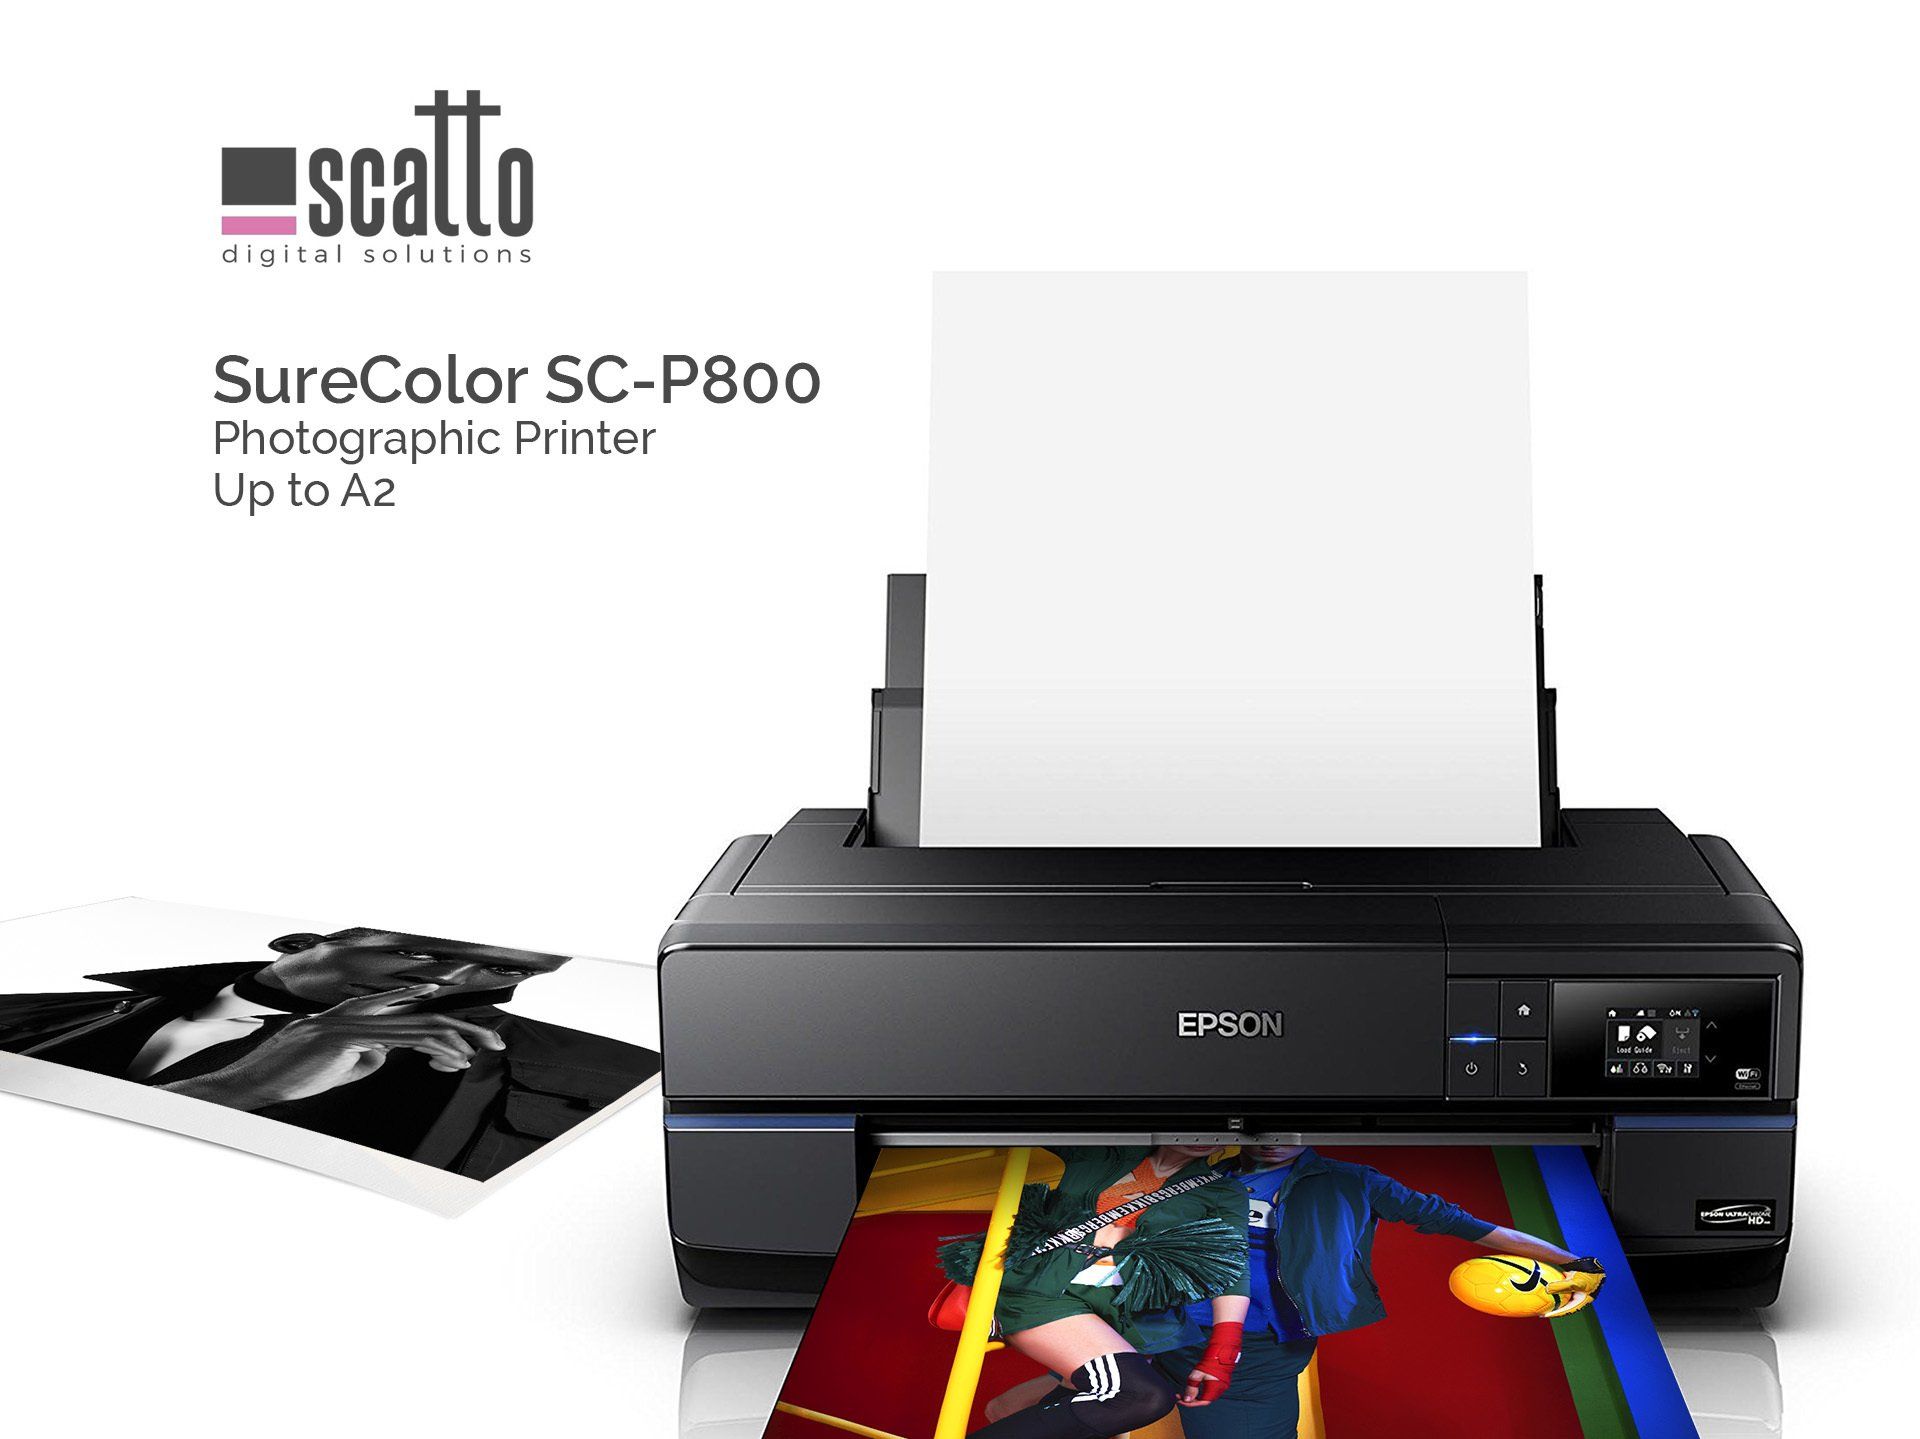 Scatto Digital Solutions-impresora- epson surecolor scp800-tecnico digital fotografia-alquiler equipo digital para fotografia-Madrid-Spain